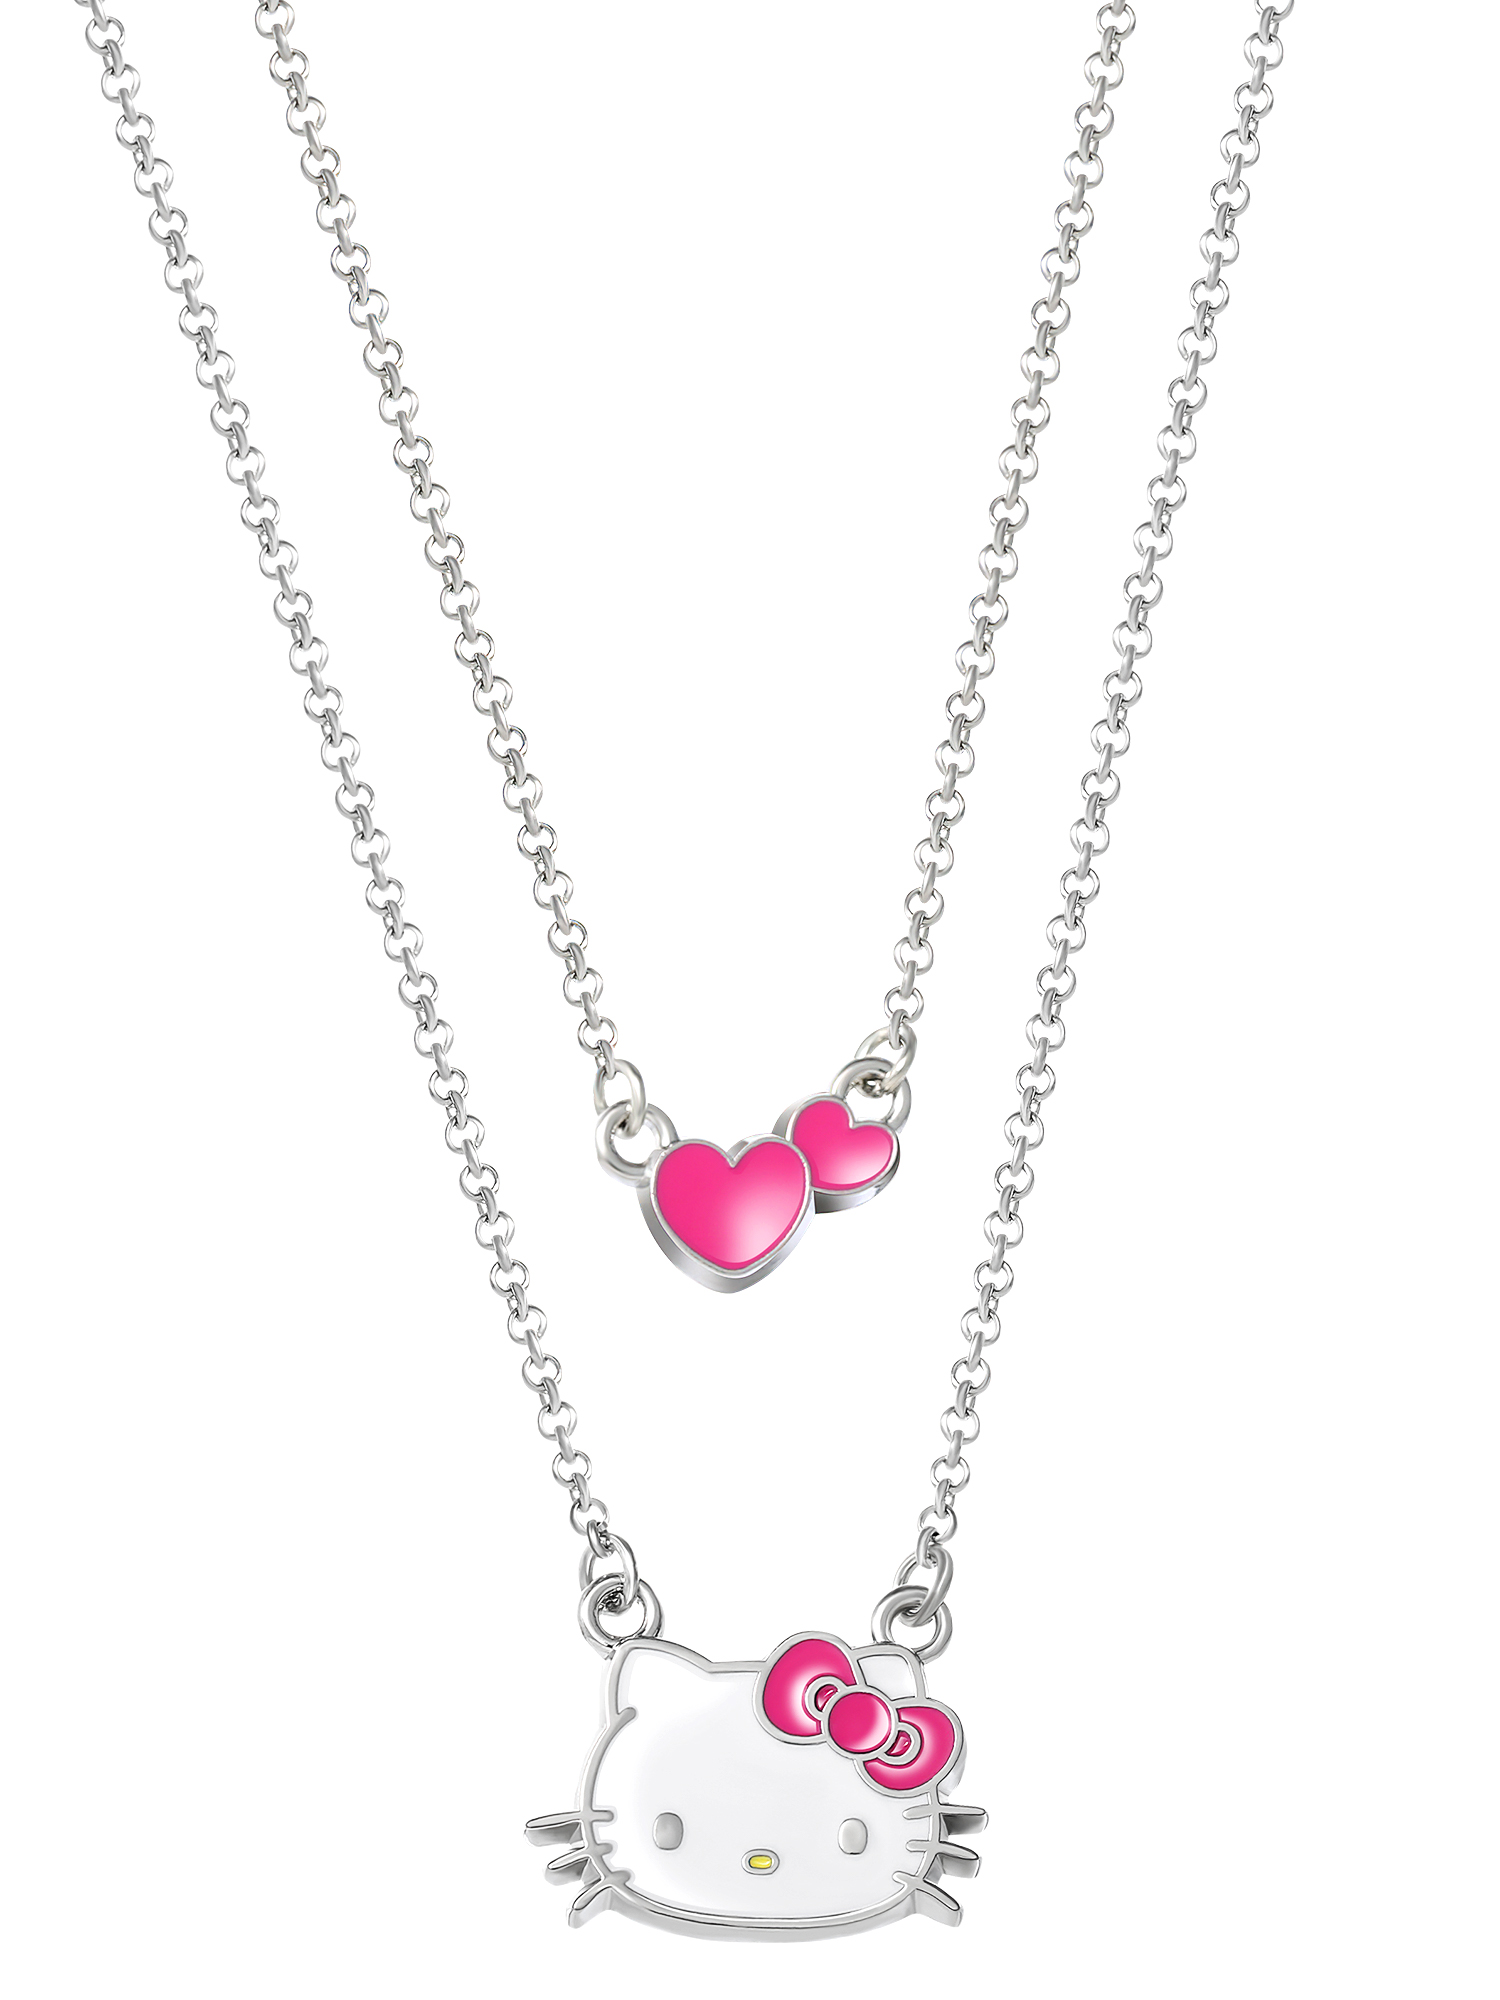 Hello Kitty Girls Enamel Hearts Double Necklace Set - image 2 of 4